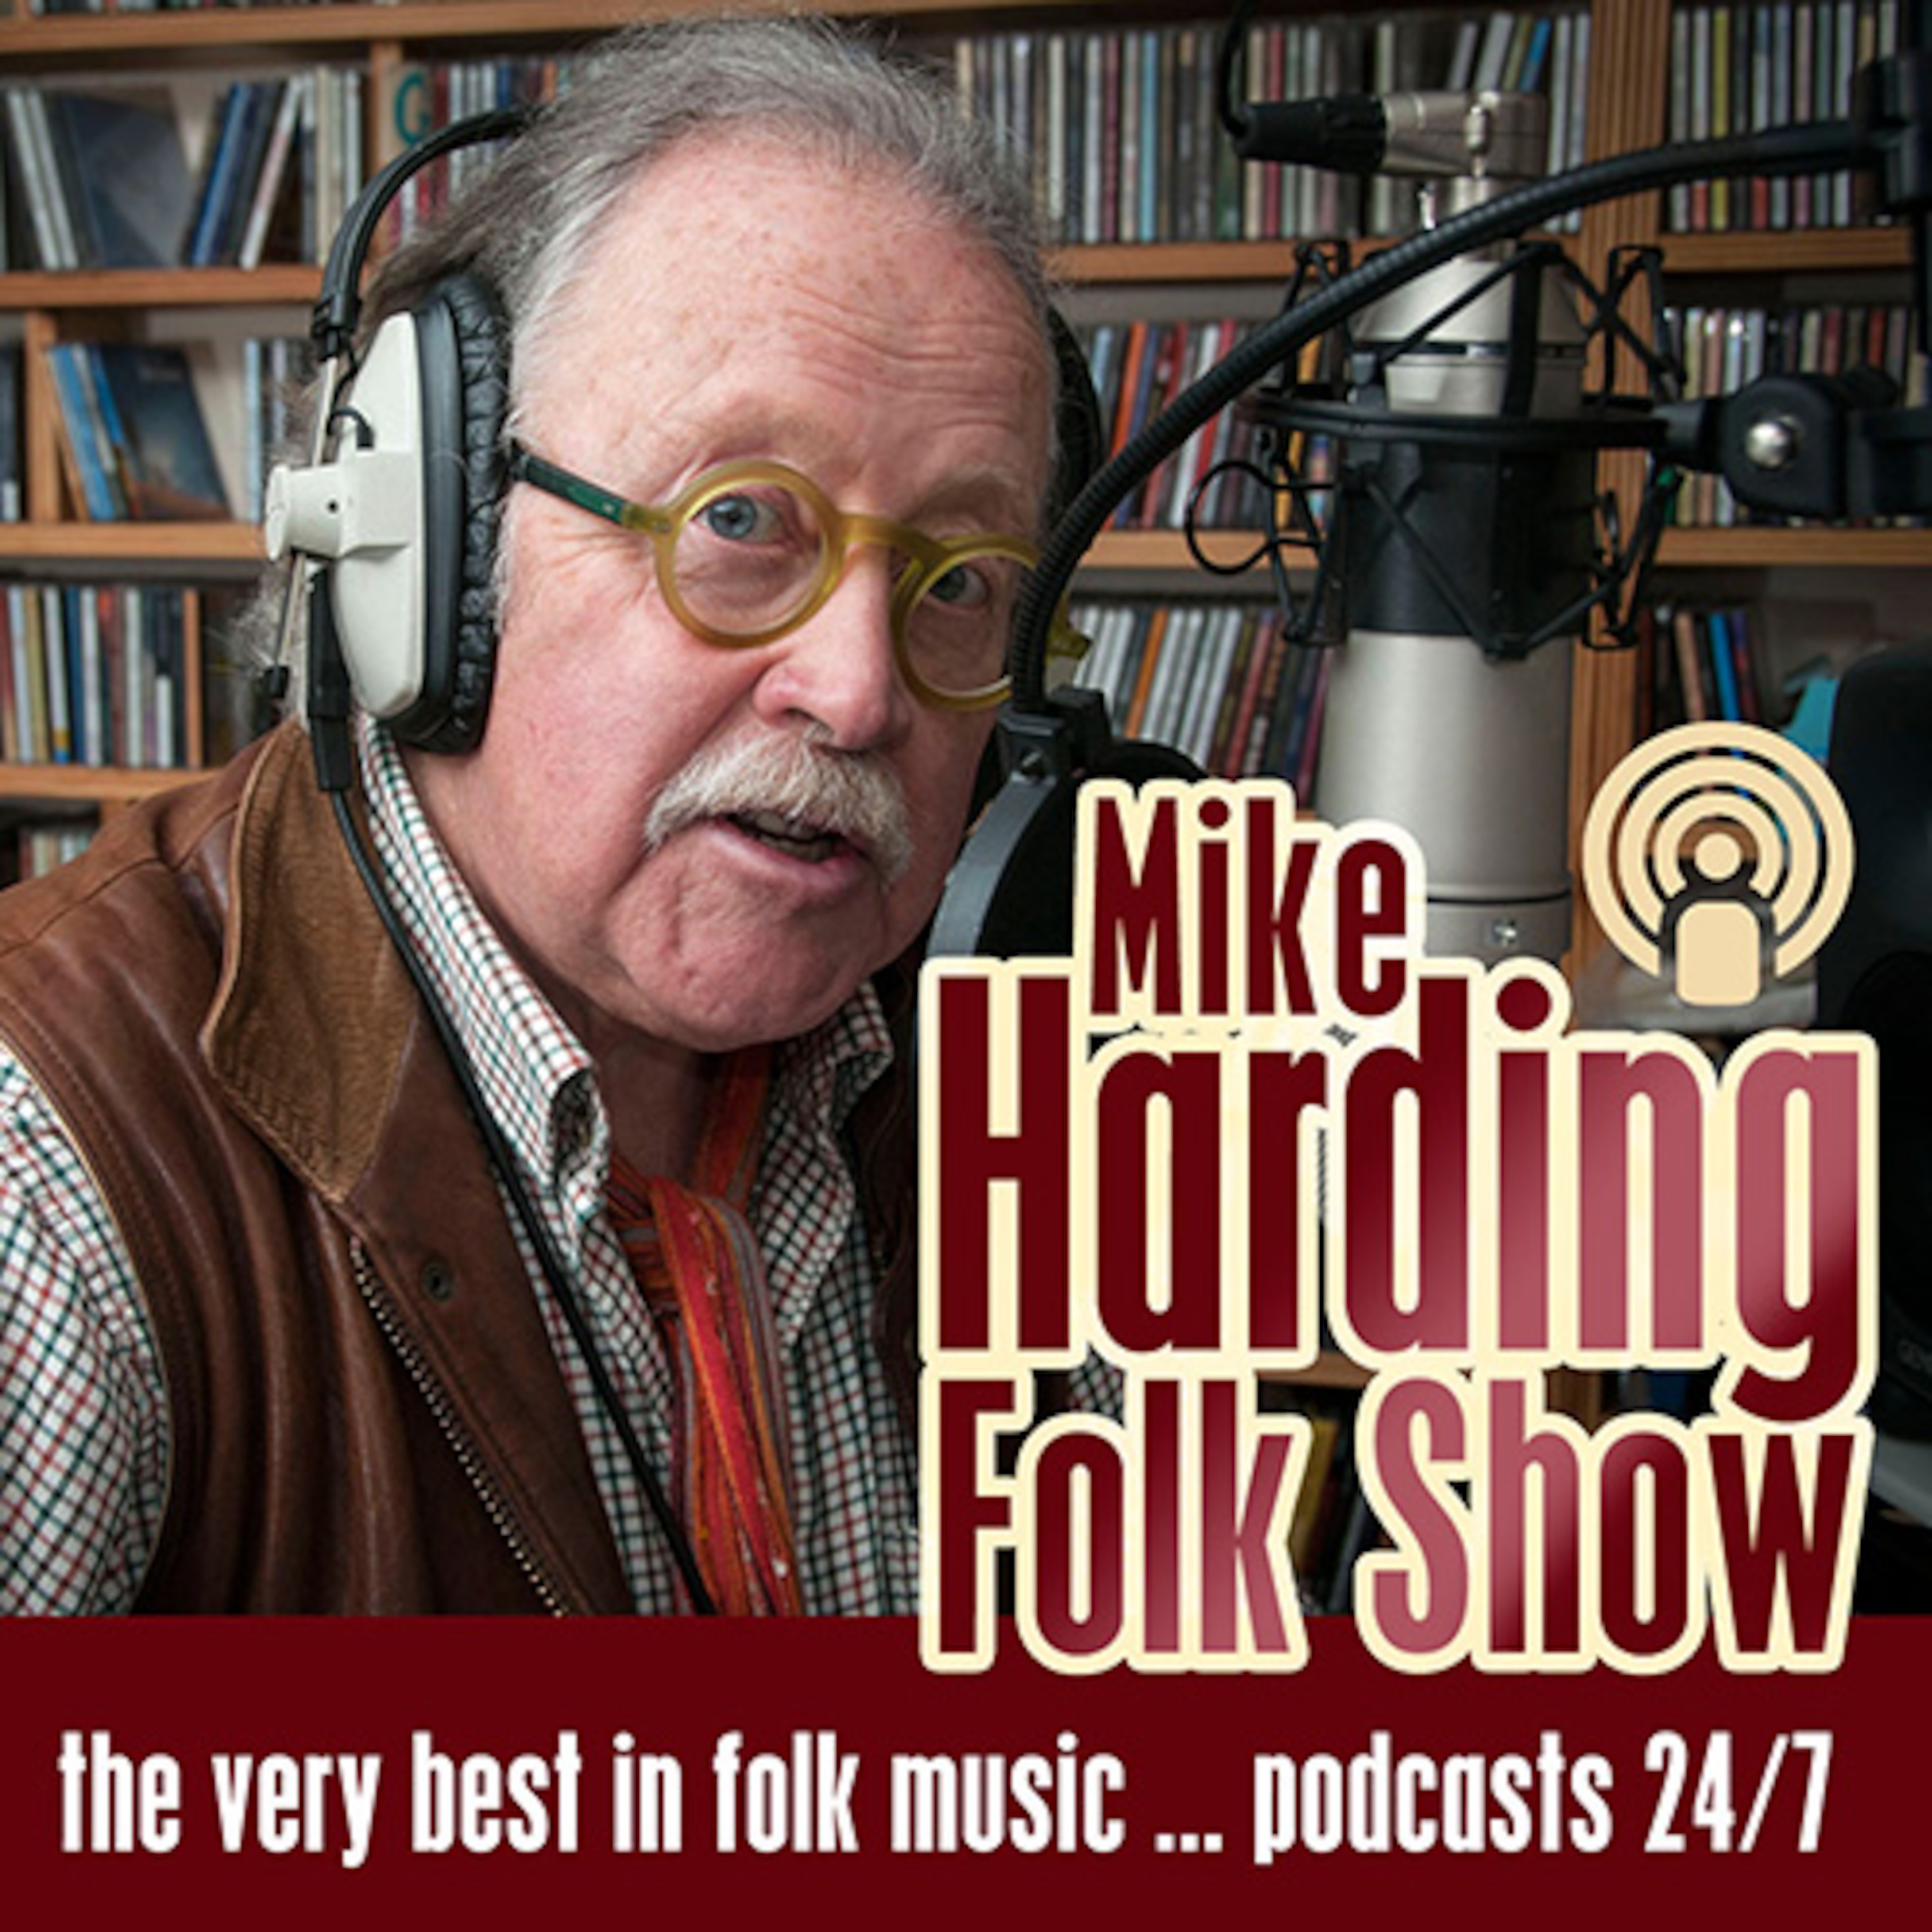 Mike Harding Folk Show 154